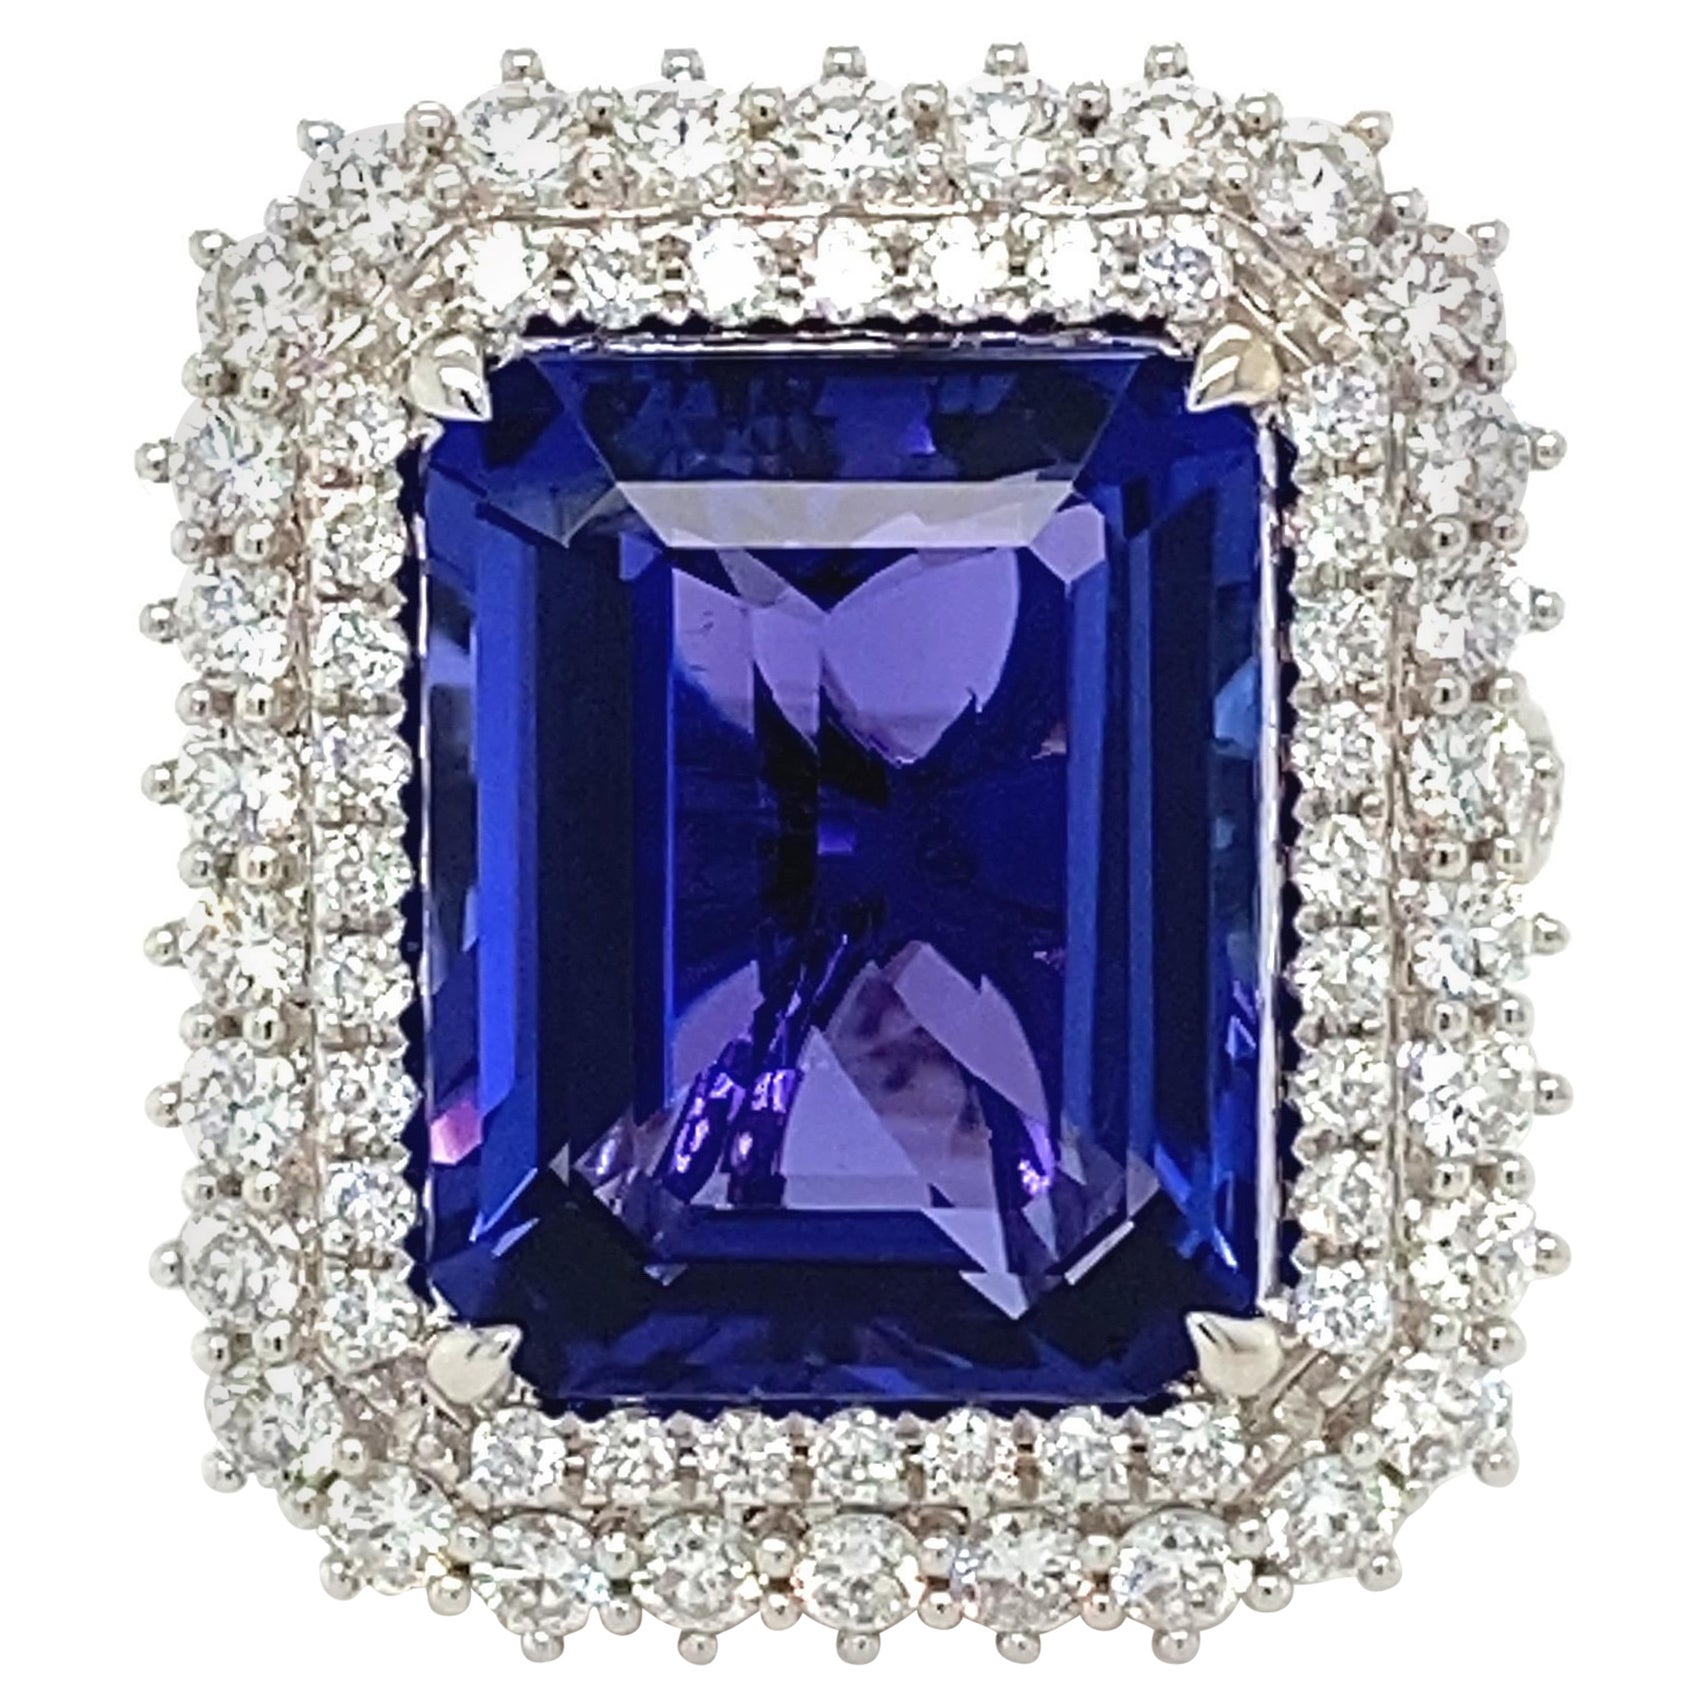 10.97 Carat Emerald Cut Tanzanite Diamond Halo Ring